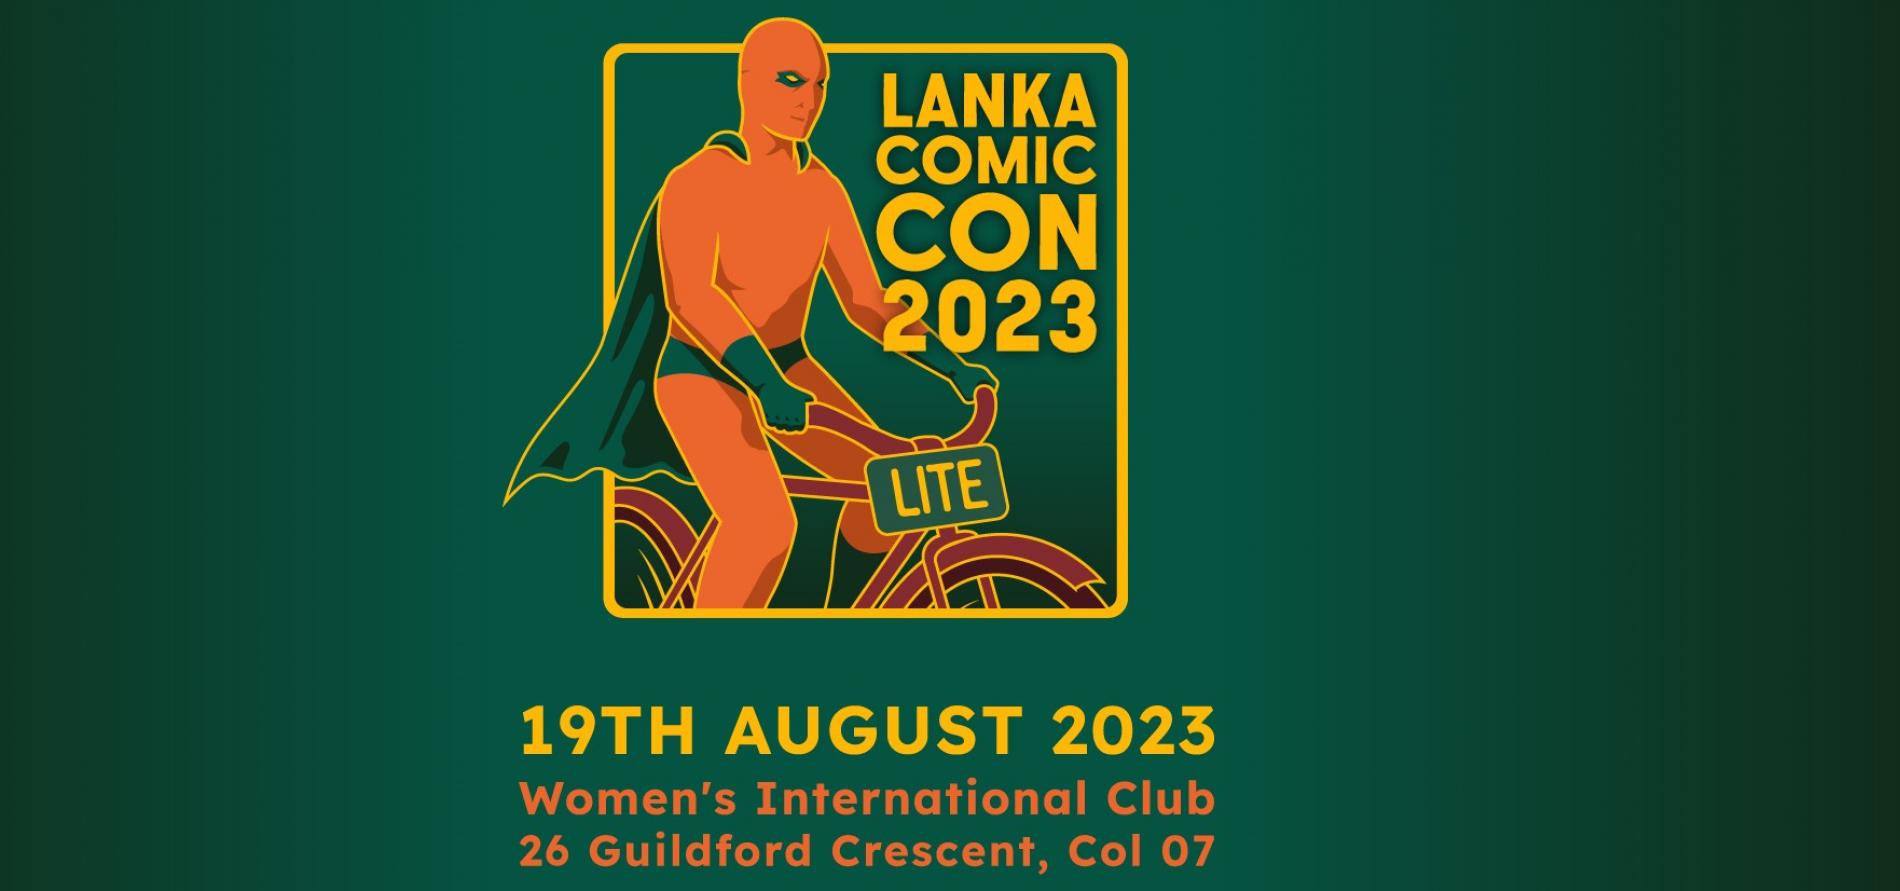 Lanka Comic Con Lite 2023